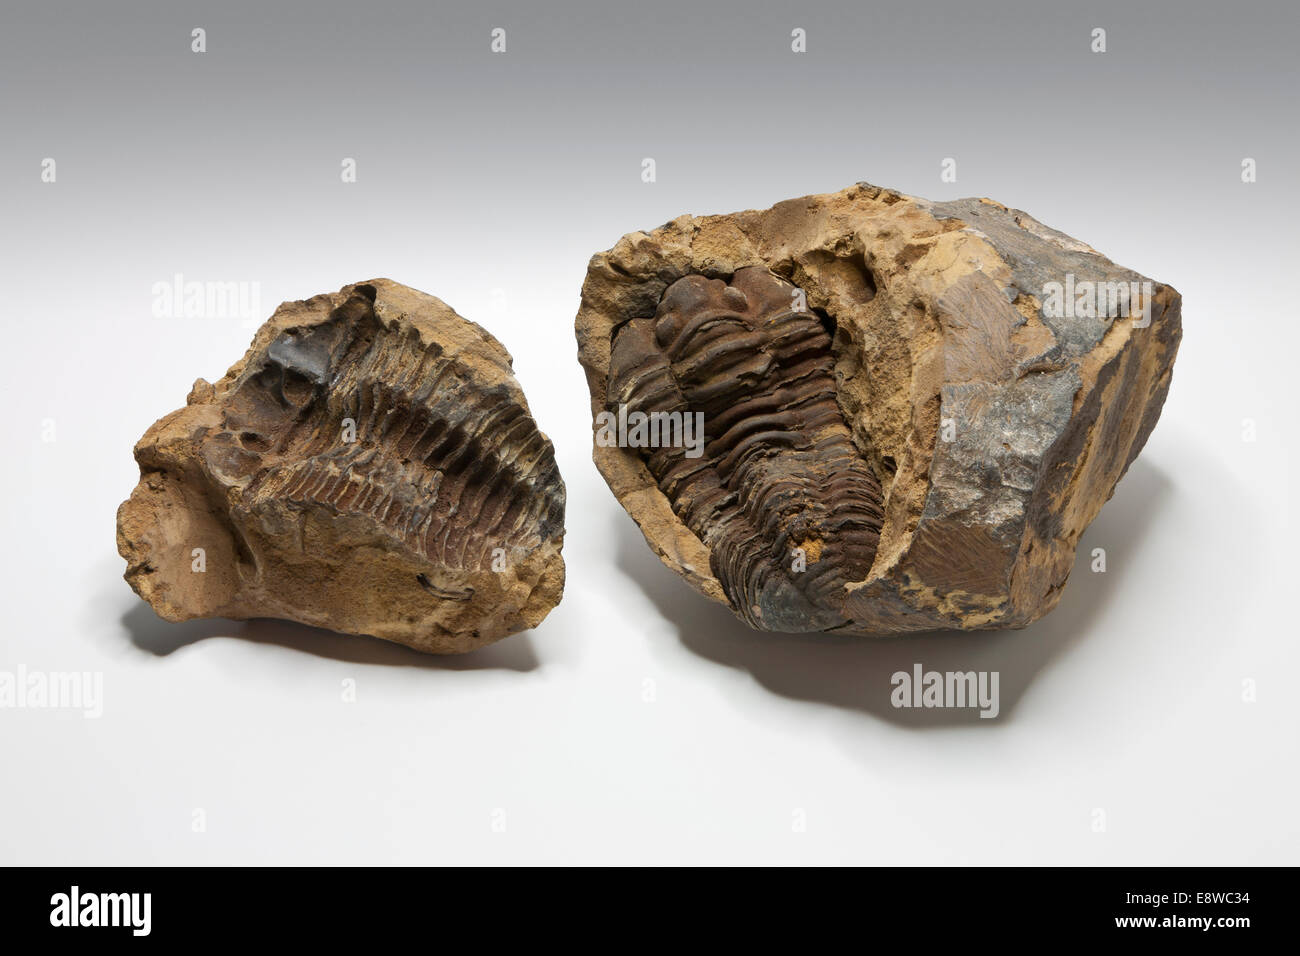 Solo fósil de trilobites de Marruecos contra un fondo gris claro liso Foto de stock